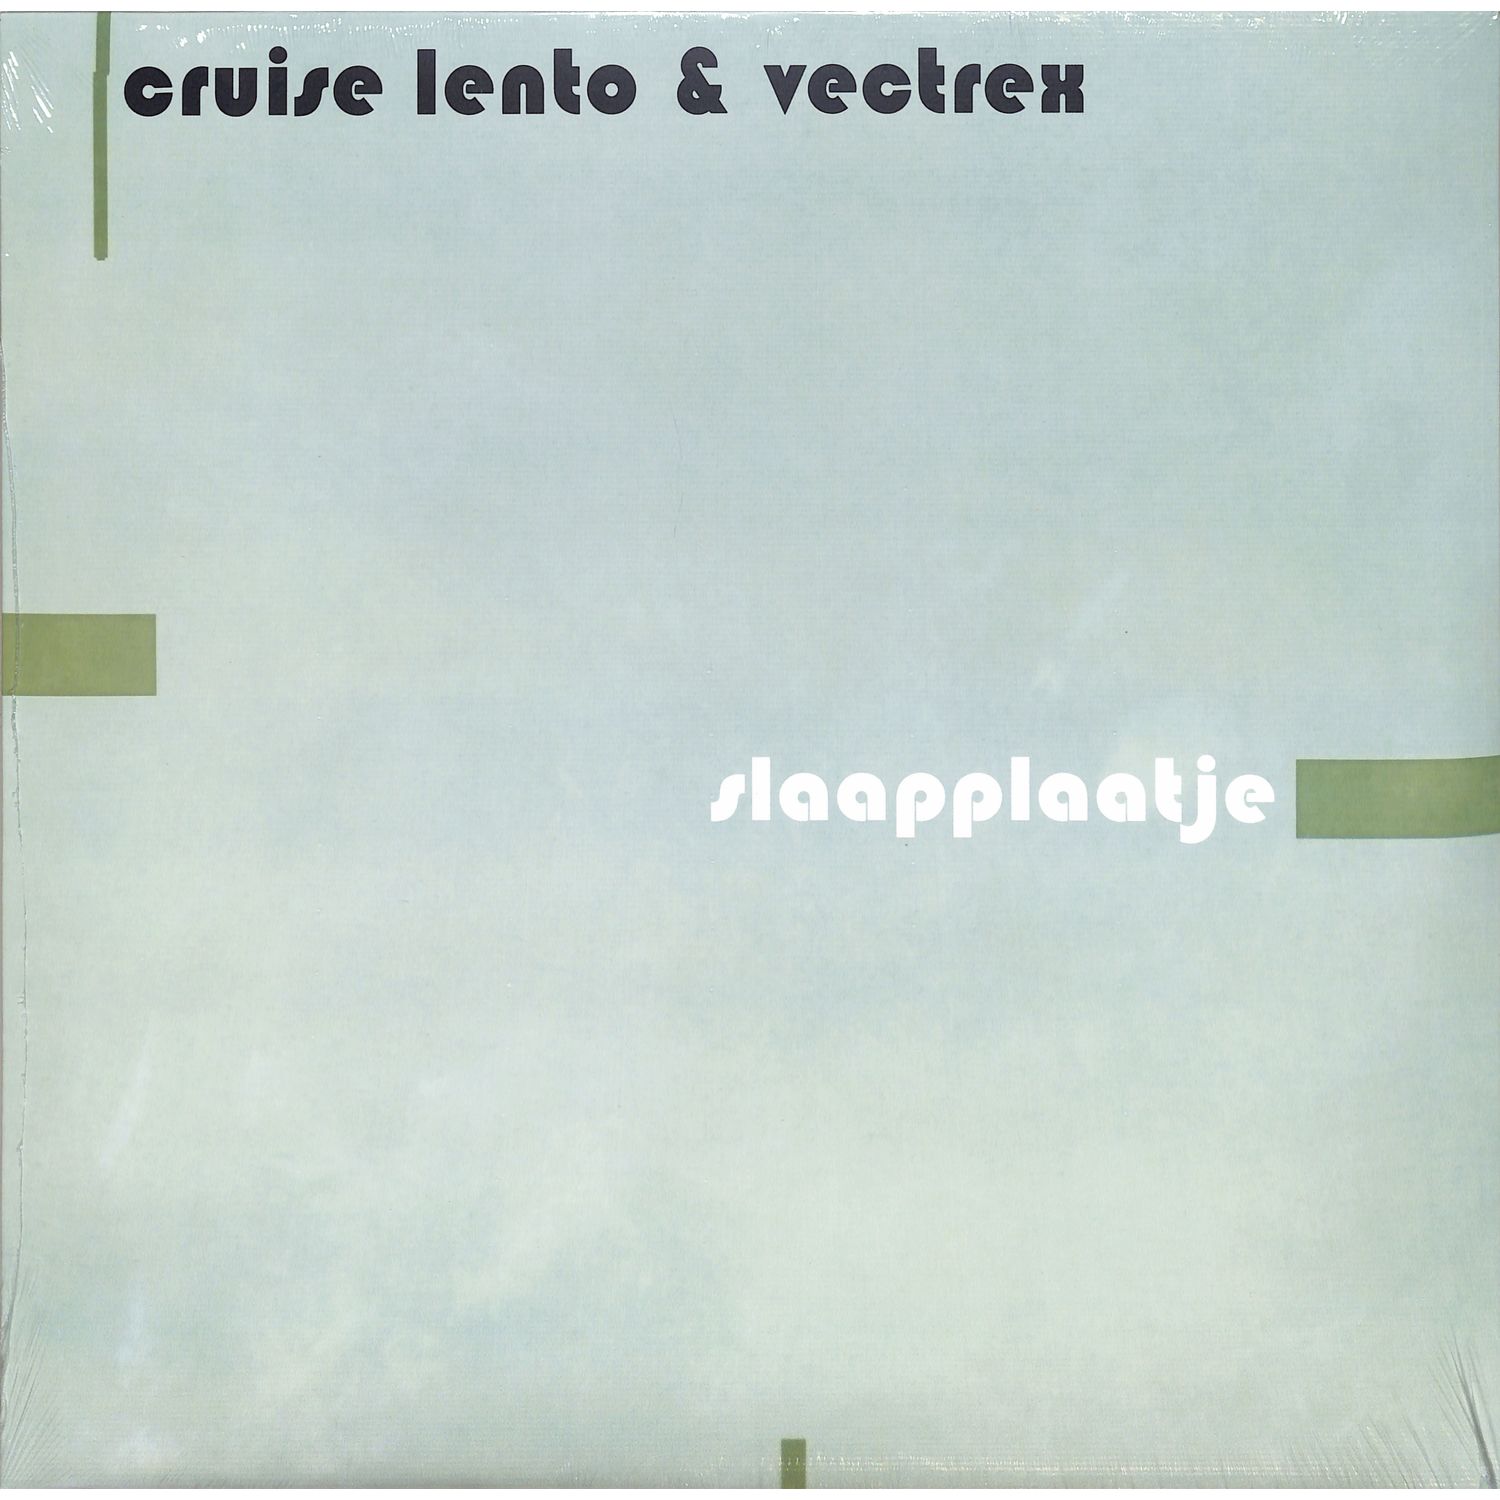 Cruise Lento & Vectrex - SLAAPPLAATJE